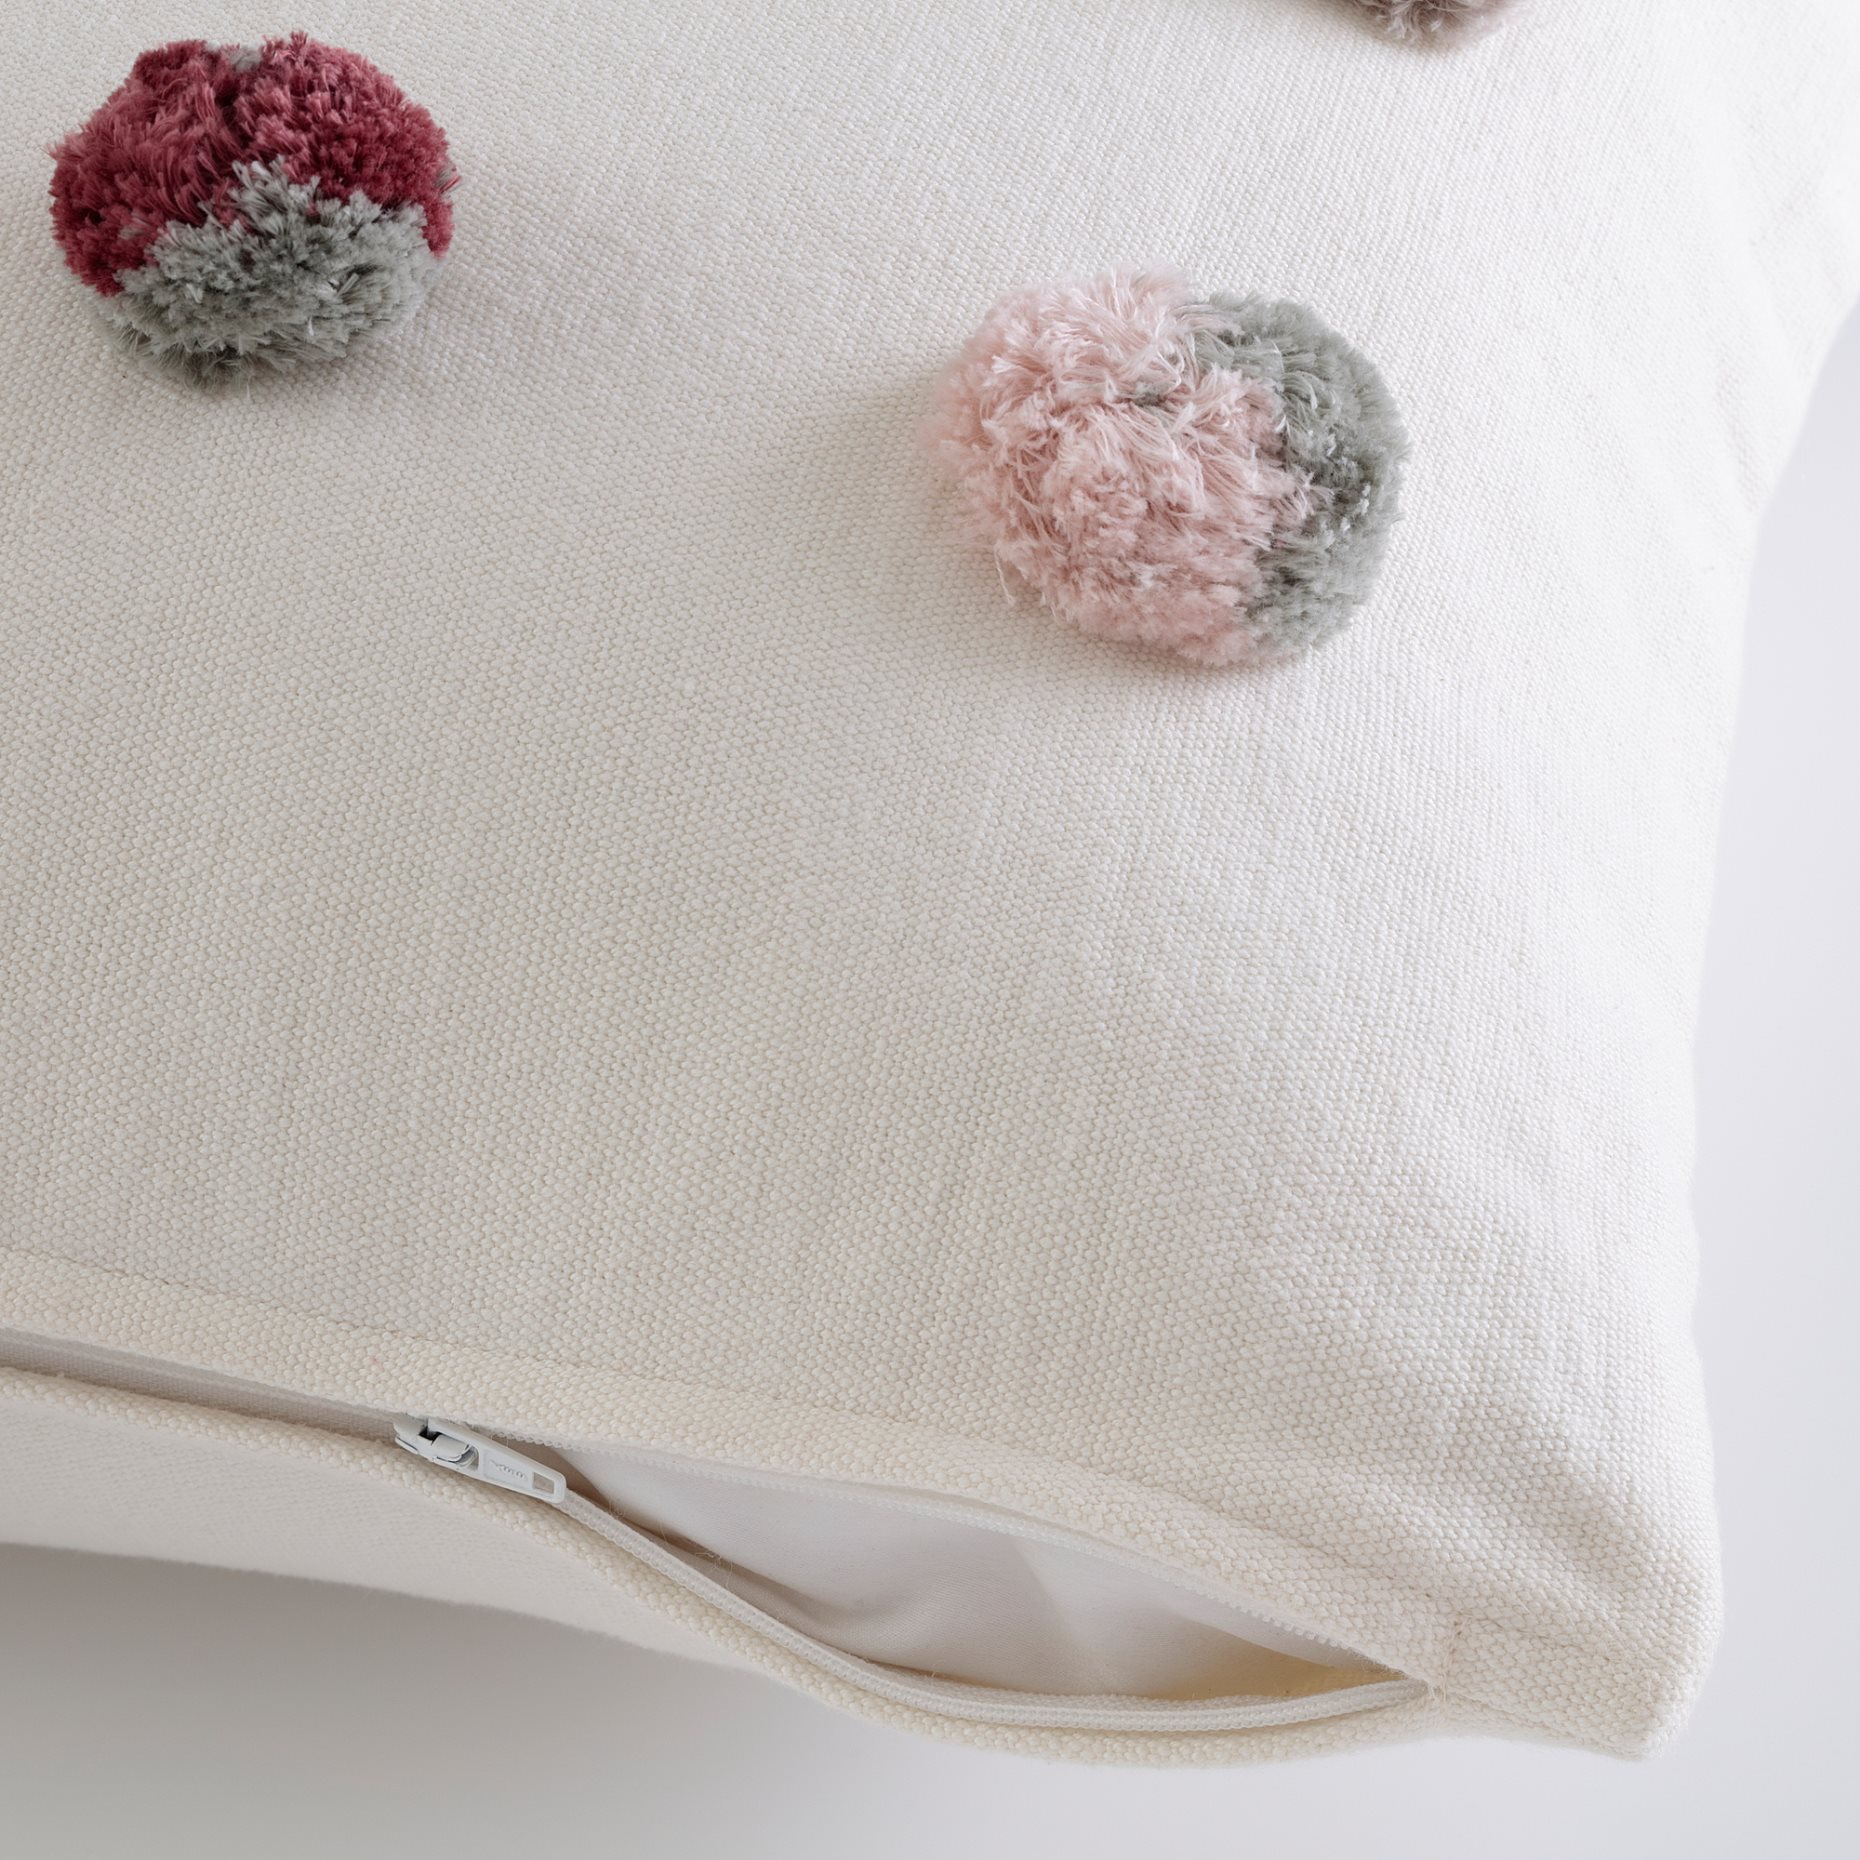 DVÄRGNARV, cushion cover/handmade pompon, 50x50 cm, 105.278.84